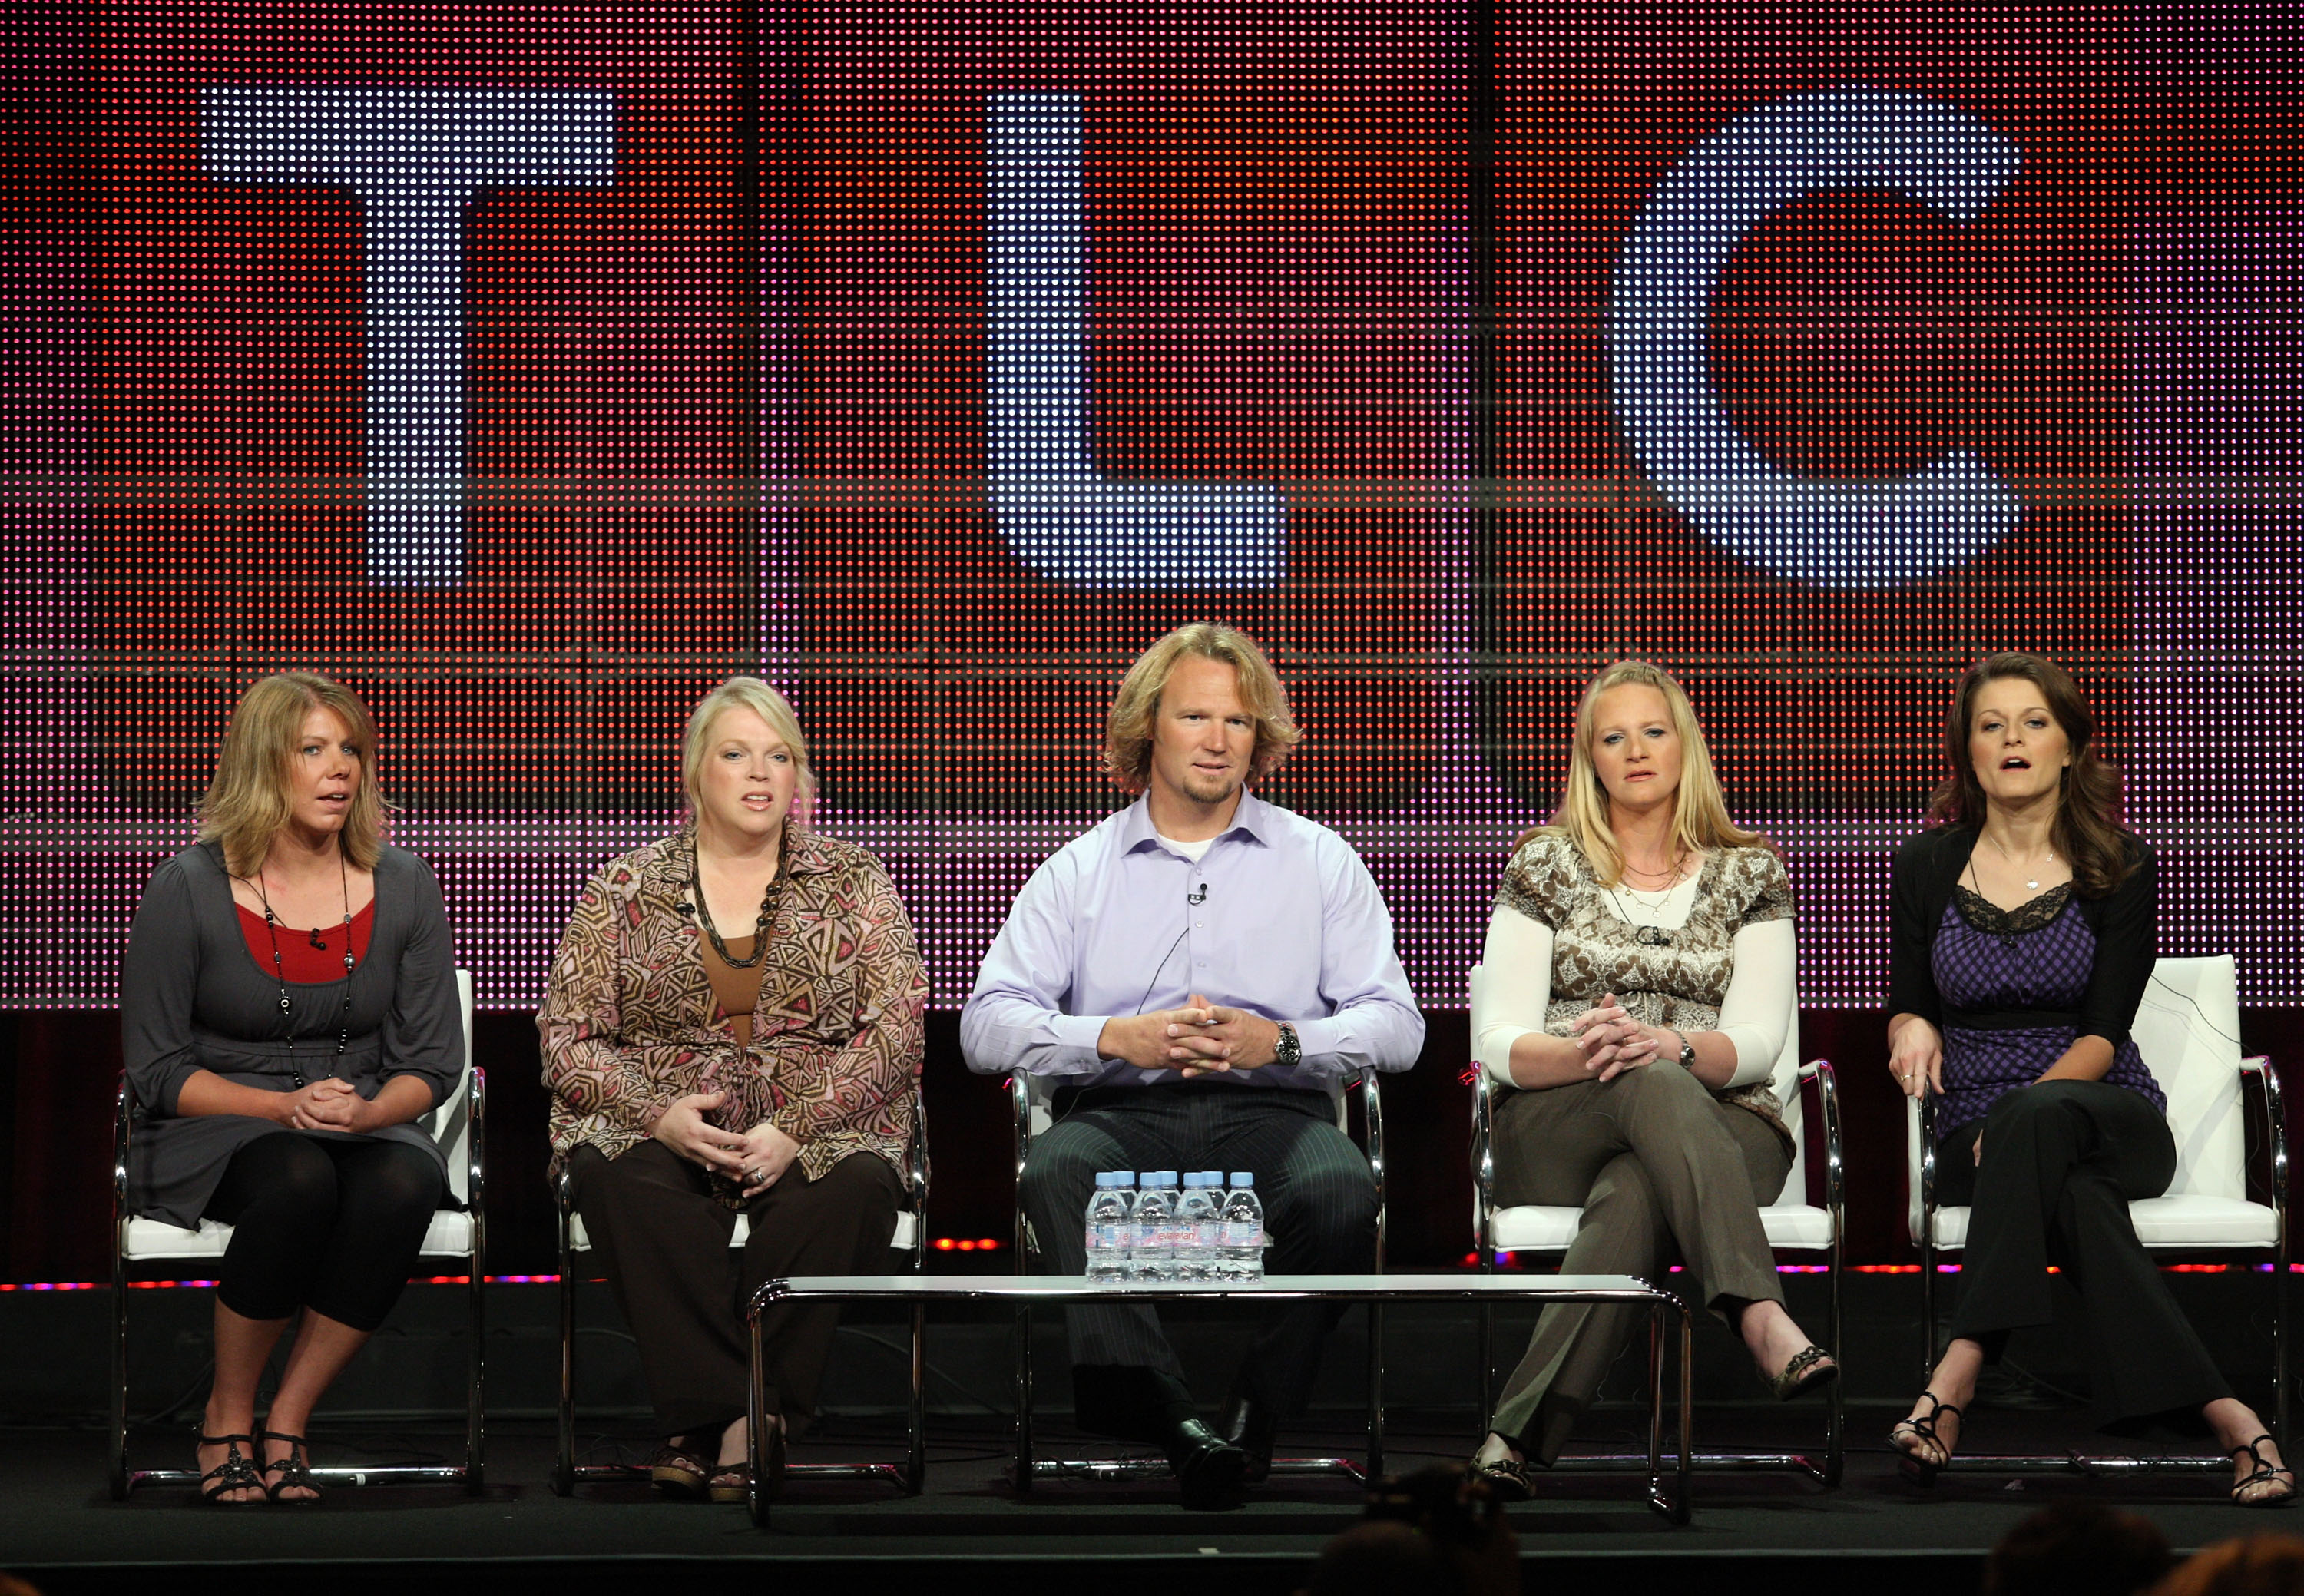 Meri Brown, Janelle Brown, Kody Brown, Christine Brown and Robyn Brown speak at a panel in 2010